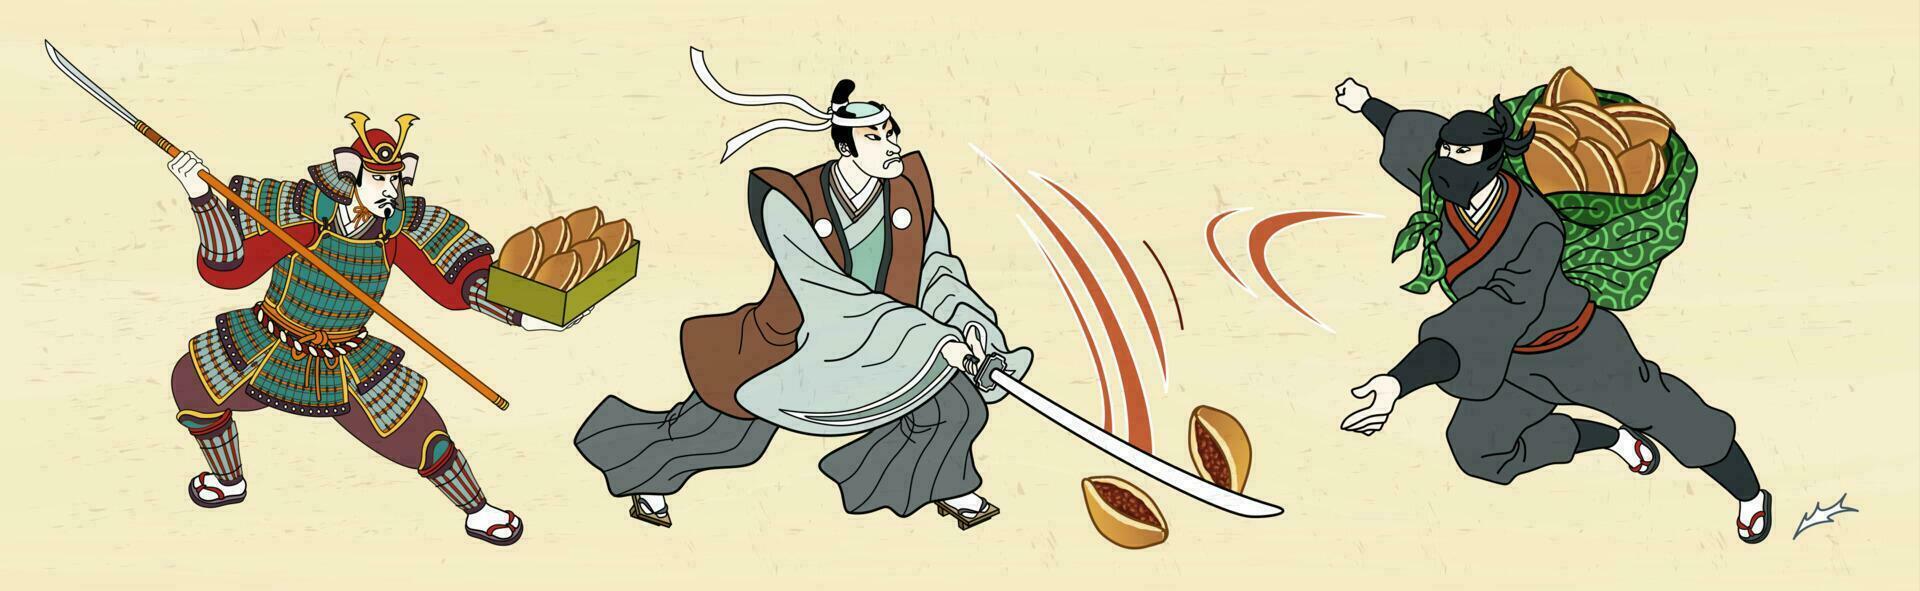 japonês geral e ninja brigando com dorayaki dentro ukiyo-e estilo vetor